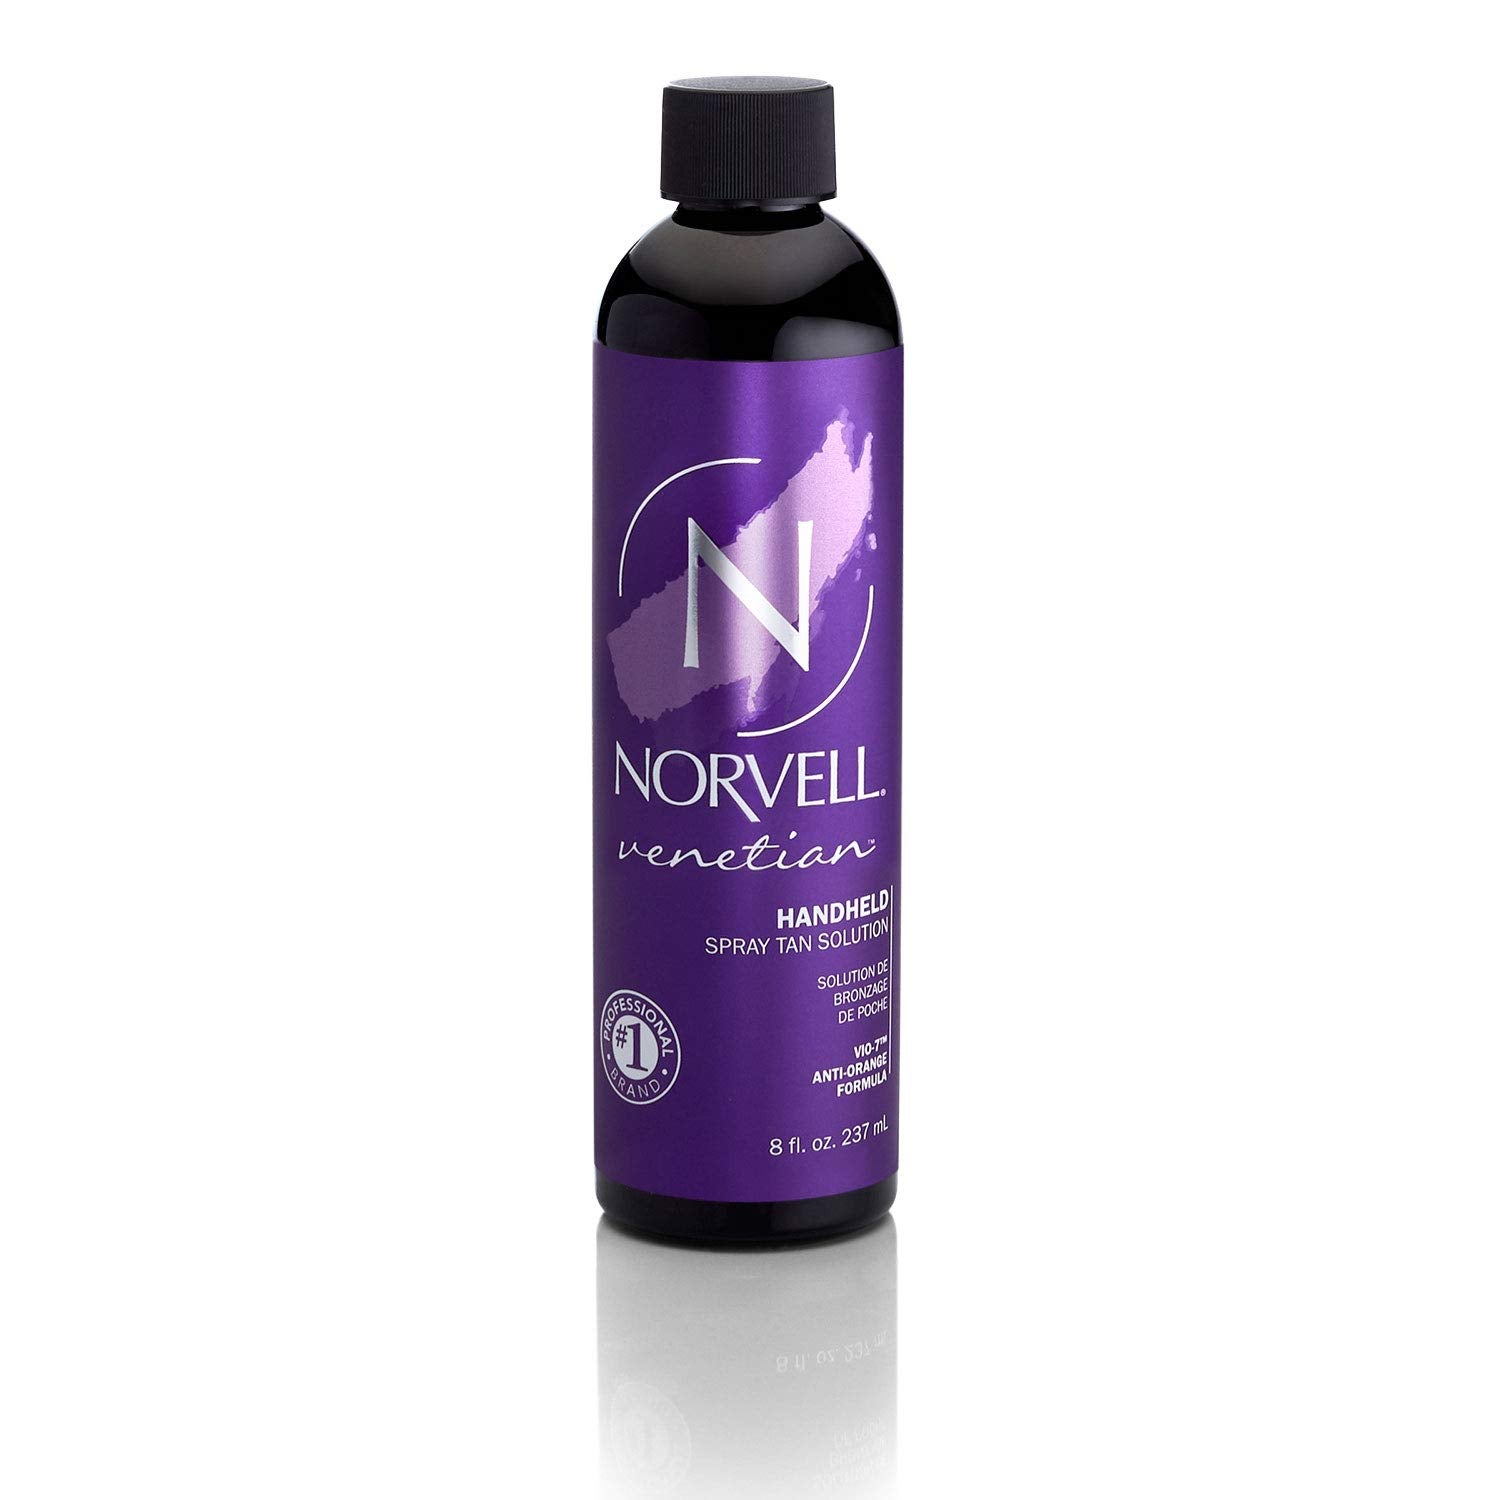 Norvell Premium Sunless Tan Solution